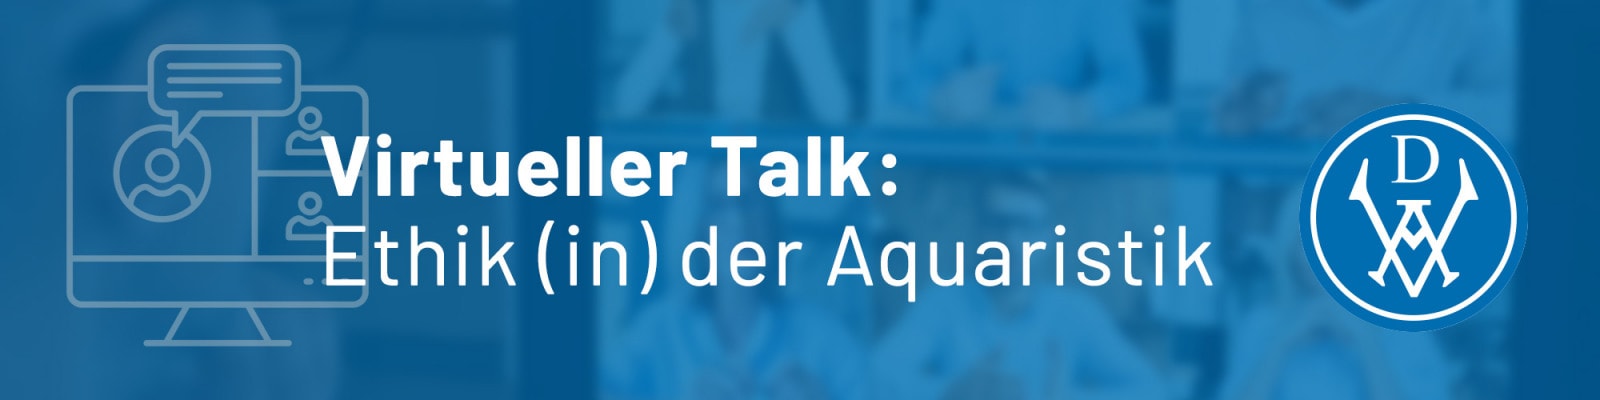 Ethik (in) der Aquaristik – Virtueller Talk